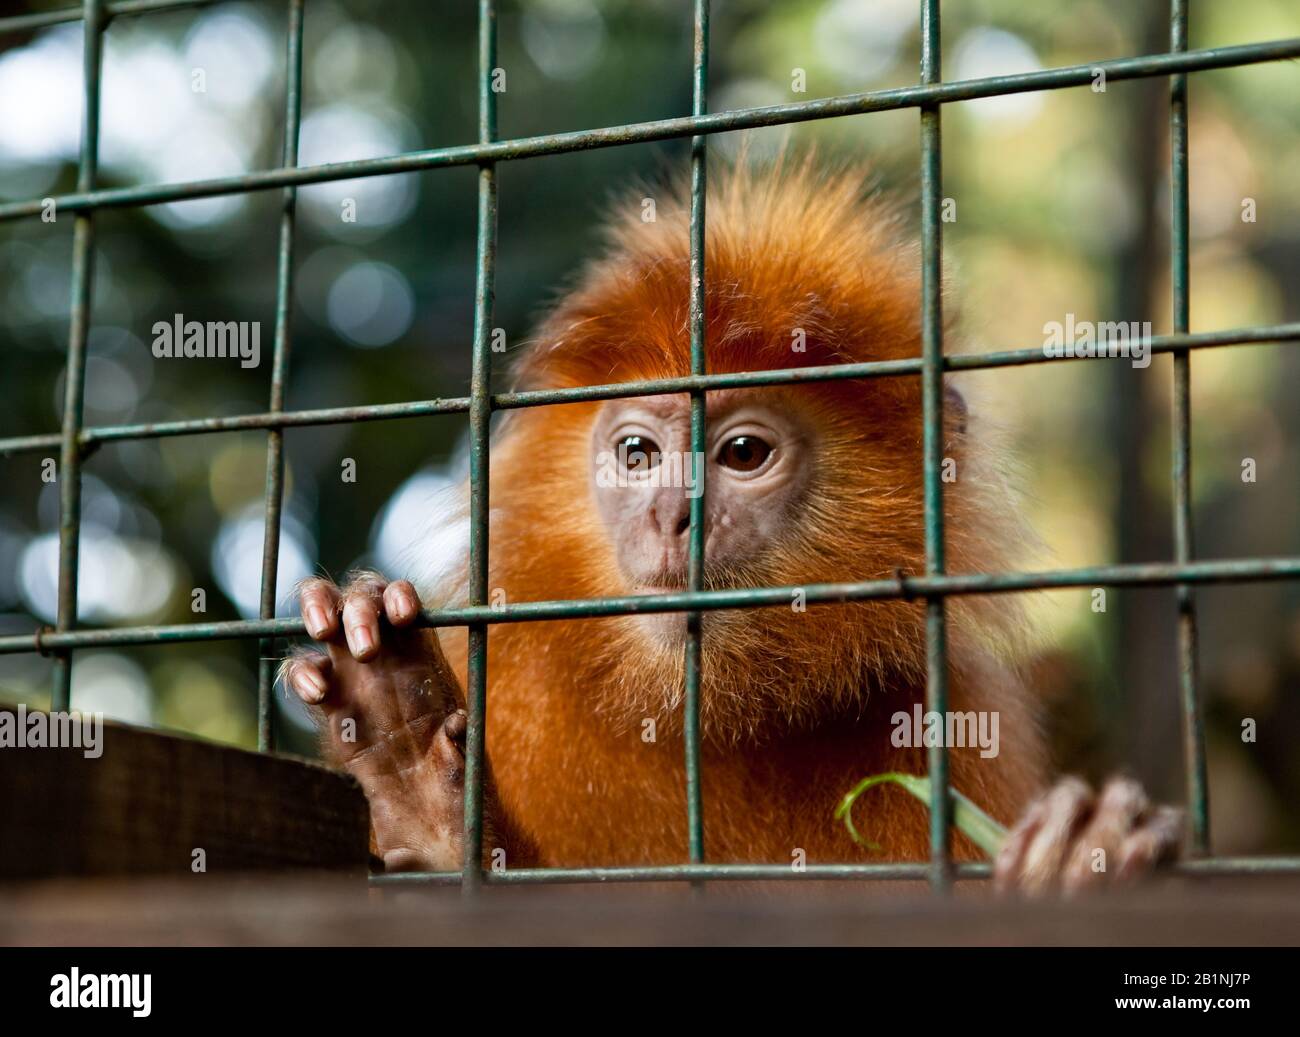 INDONESIA, BALI - JANUARY 20, 2011: Monkey in Bali zoo. Indonesia Stock  Photo - Alamy